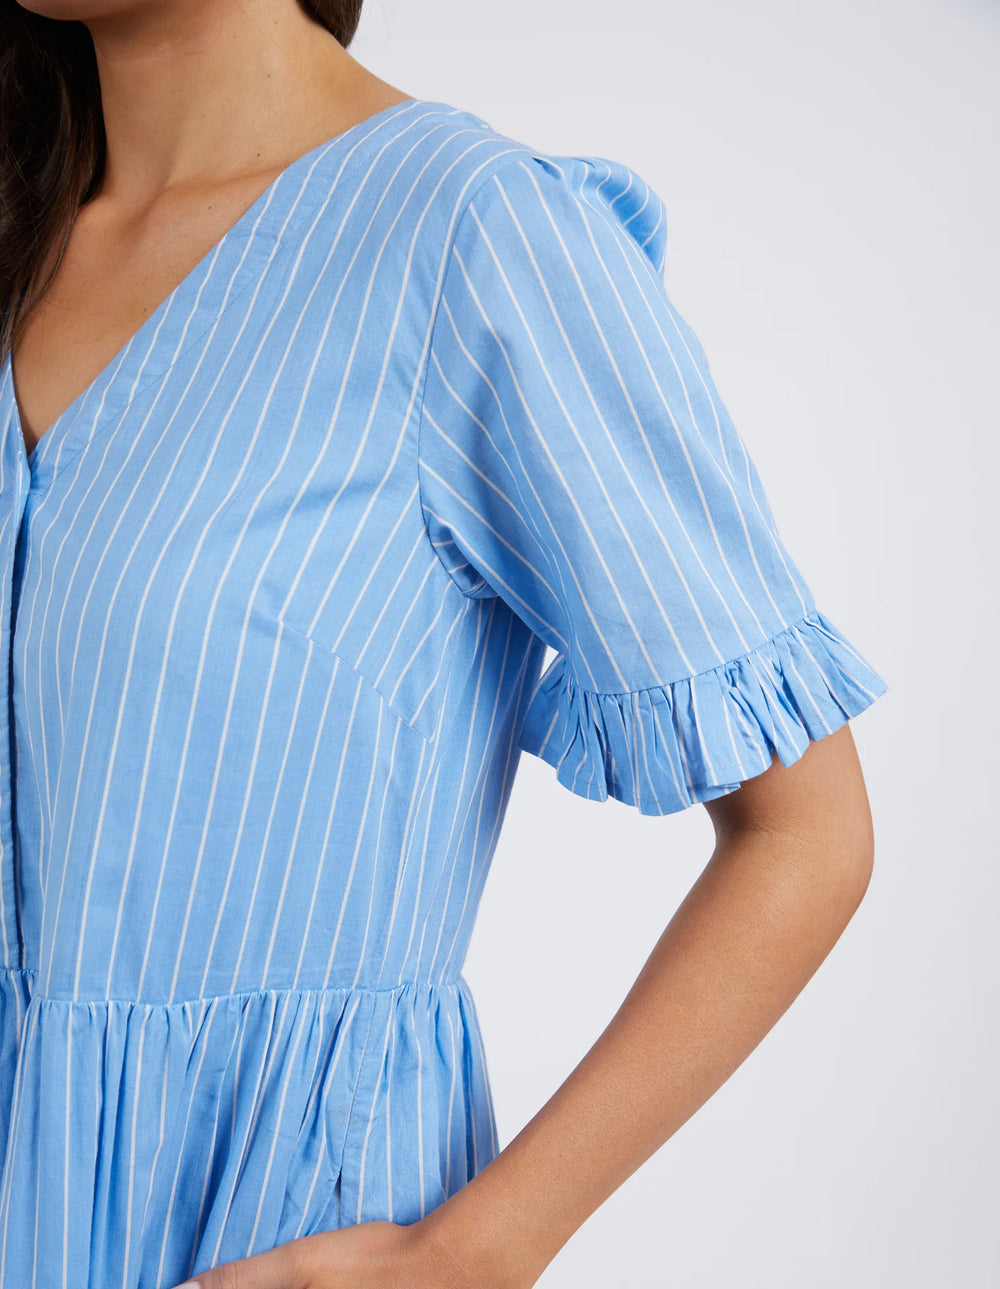 Elm Knitwear | Hailey Stripe Dress - Azure | Shut the Front Door